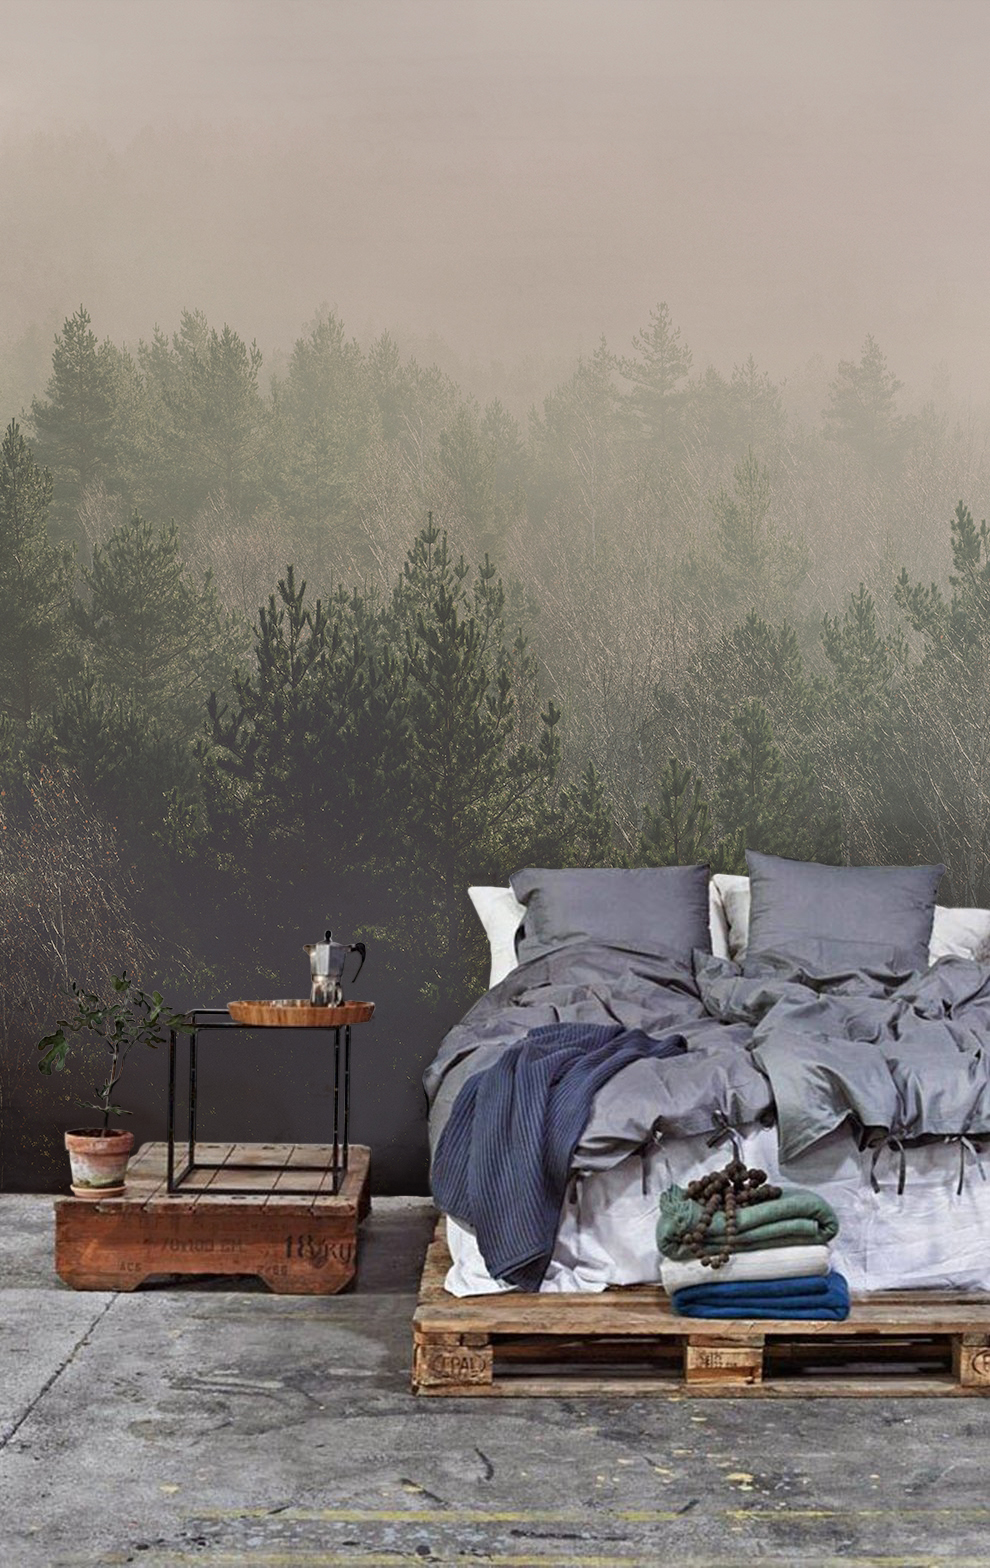 Misty-forest - Bedroom Wall Murals Diy - HD Wallpaper 